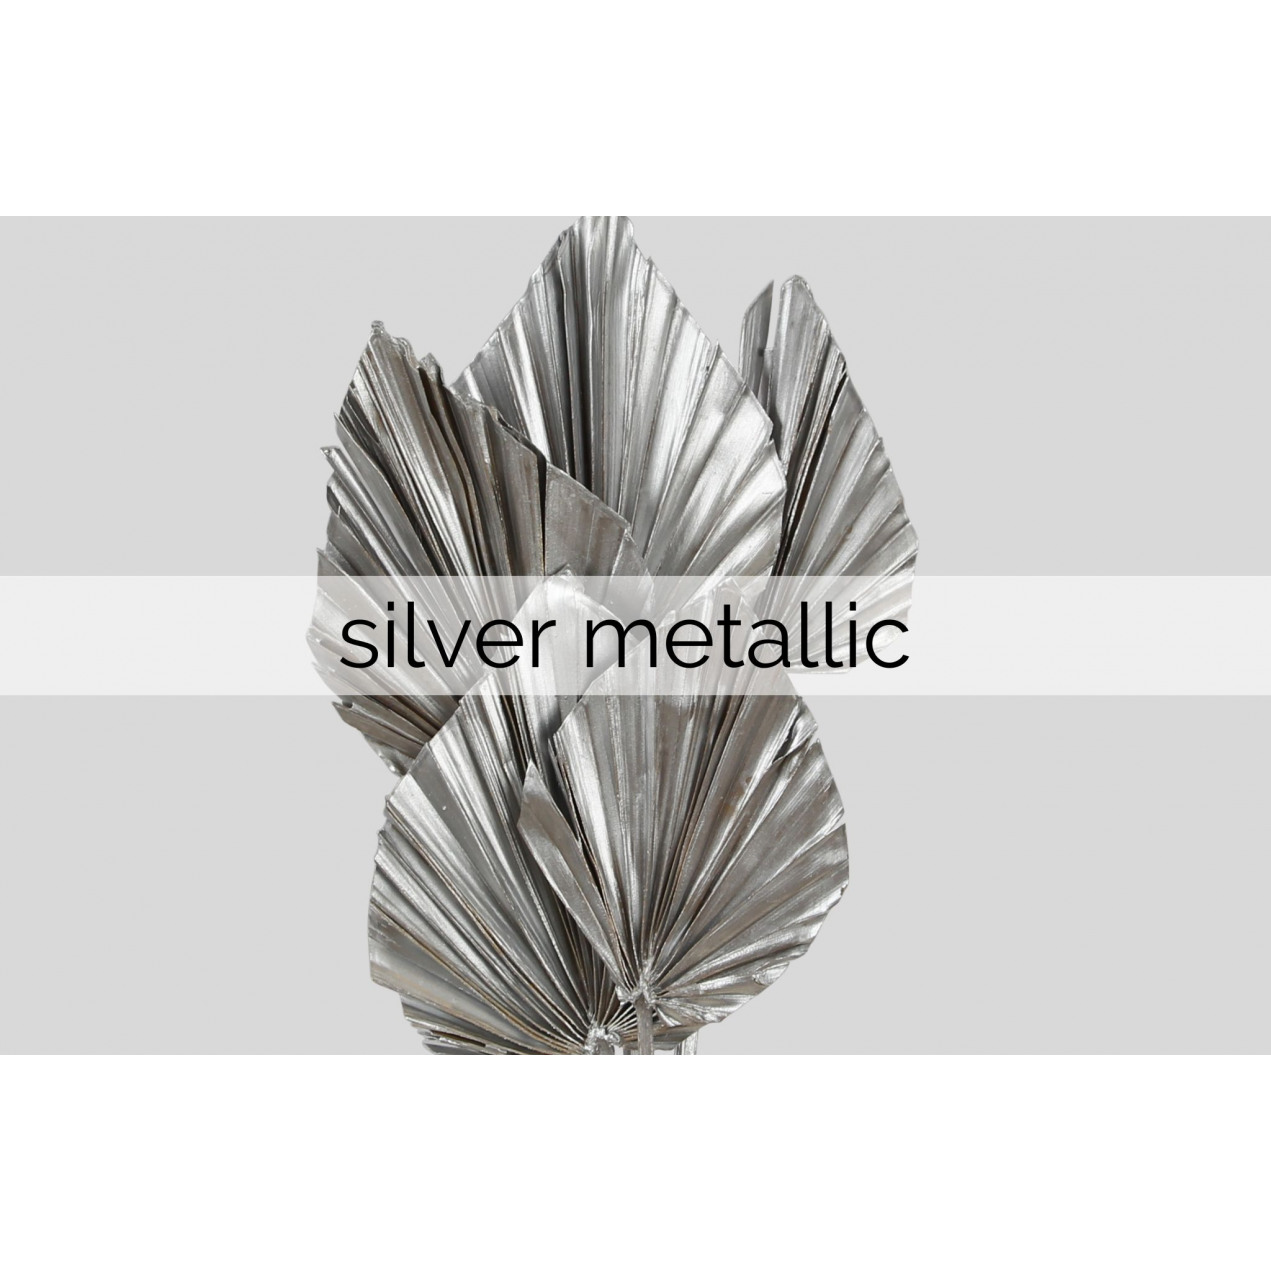 silver metallic